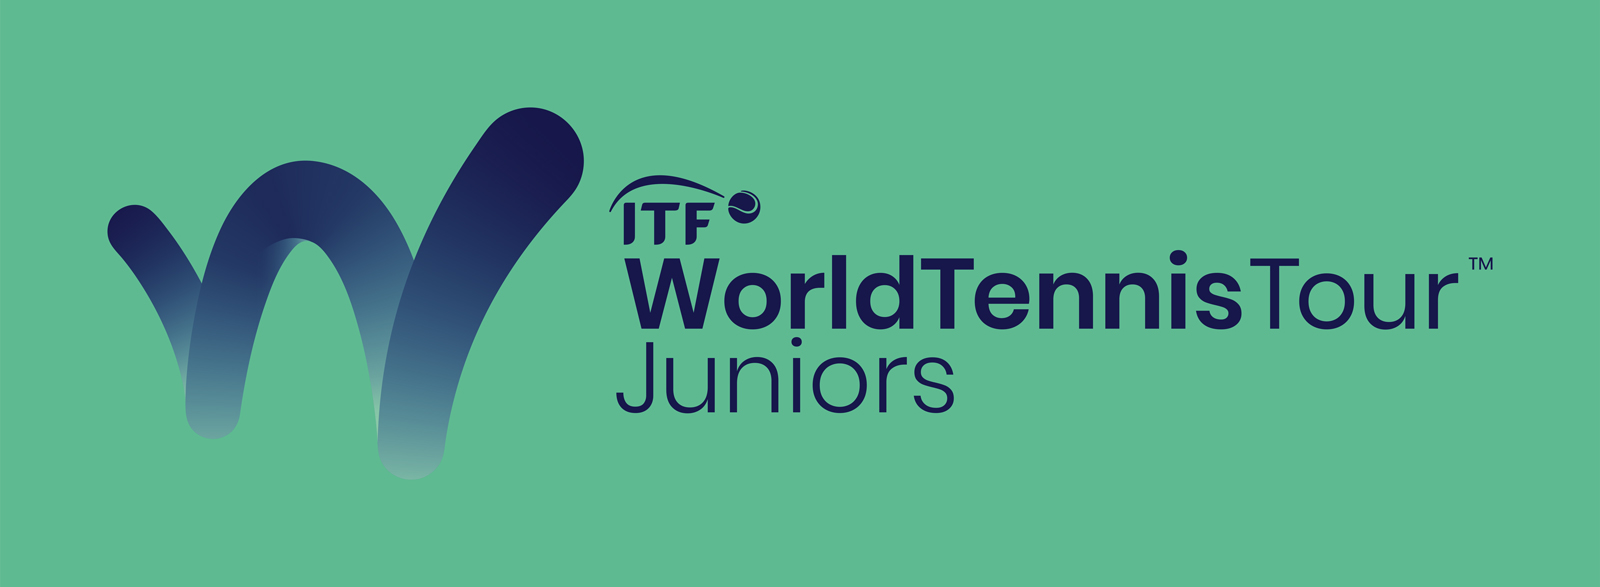 ITF World Tennis Tour Junior Rankings IMG Academy